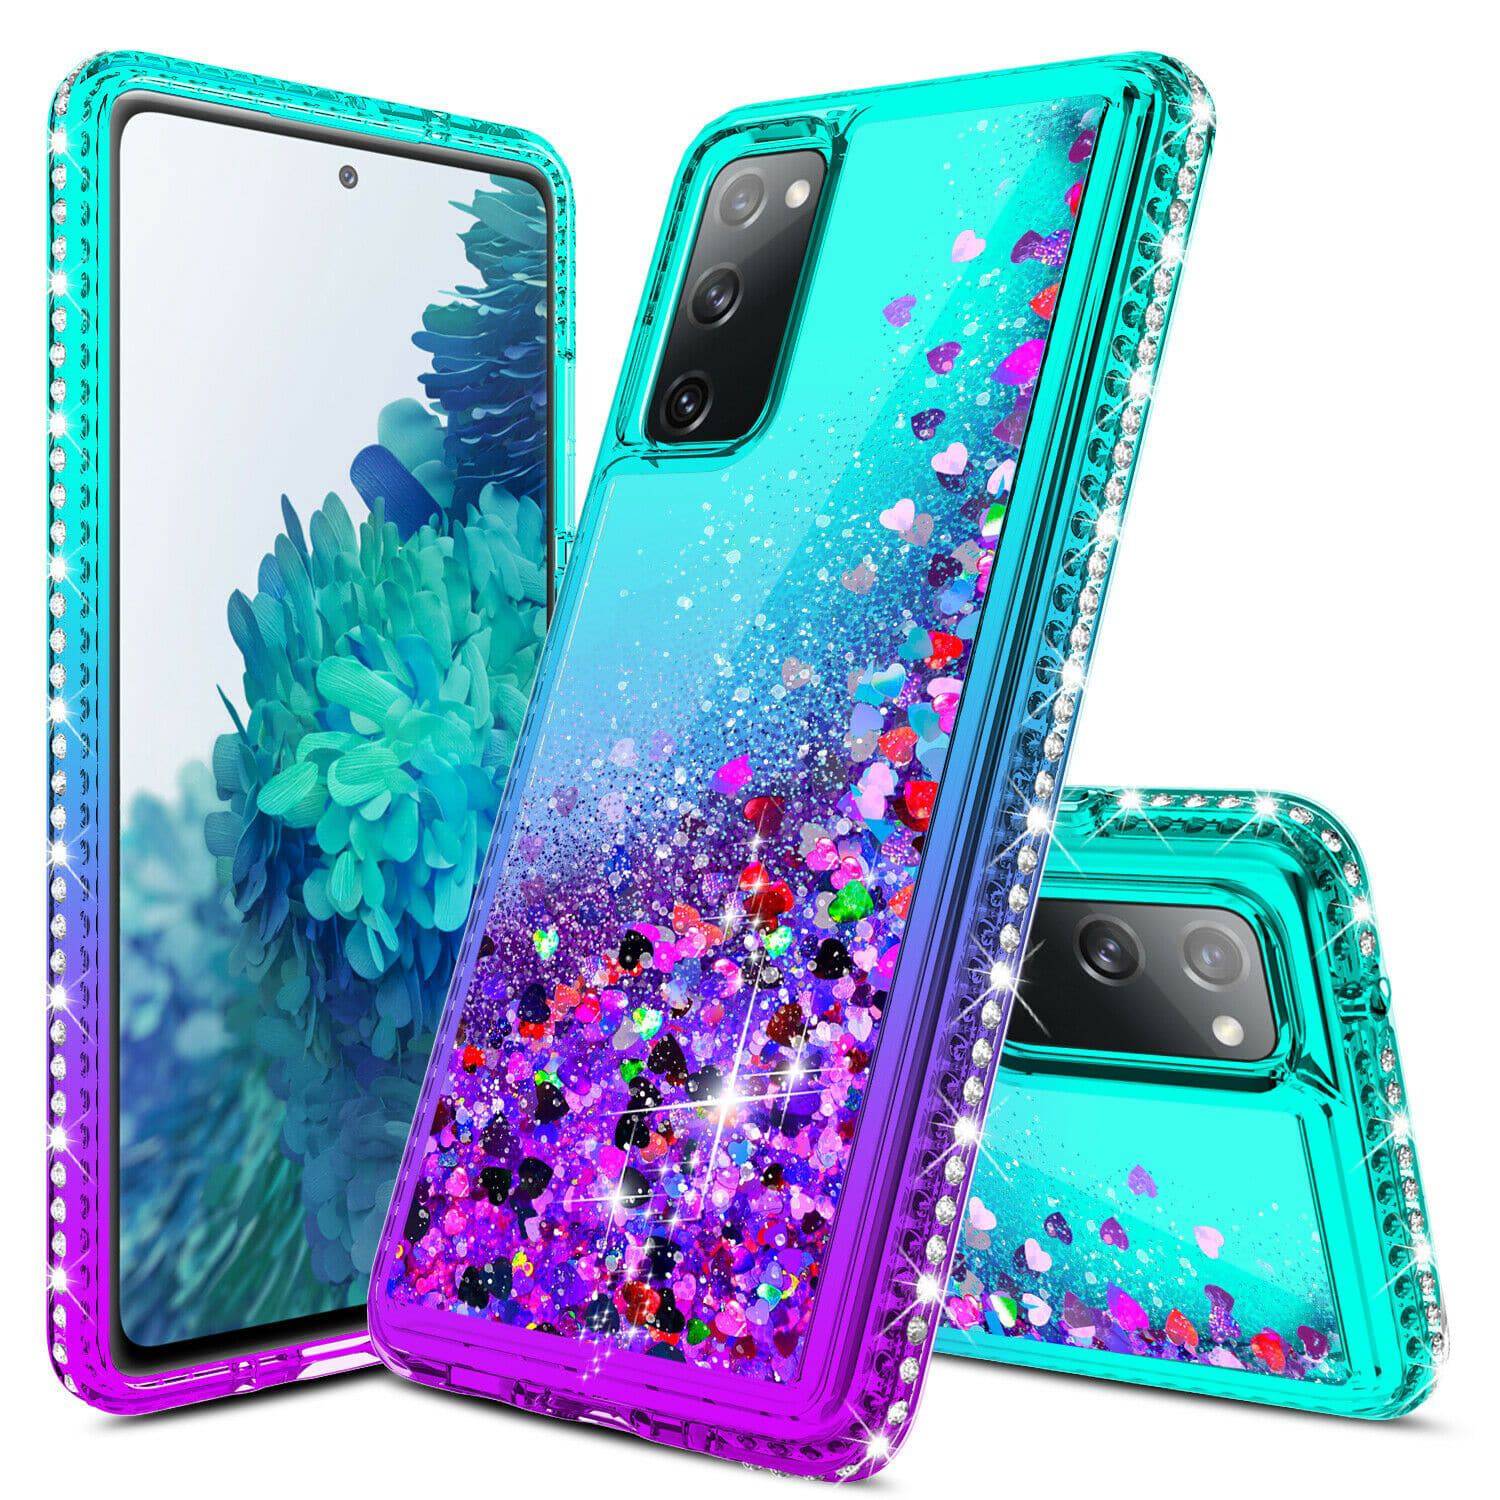 Funda para Samsung Galaxy S20 FE Fashion Phone, Creativity Quicksand Series  Glitter Bling Fluing Liquid Flotante Soft TPU Protector Girls Phone Cover